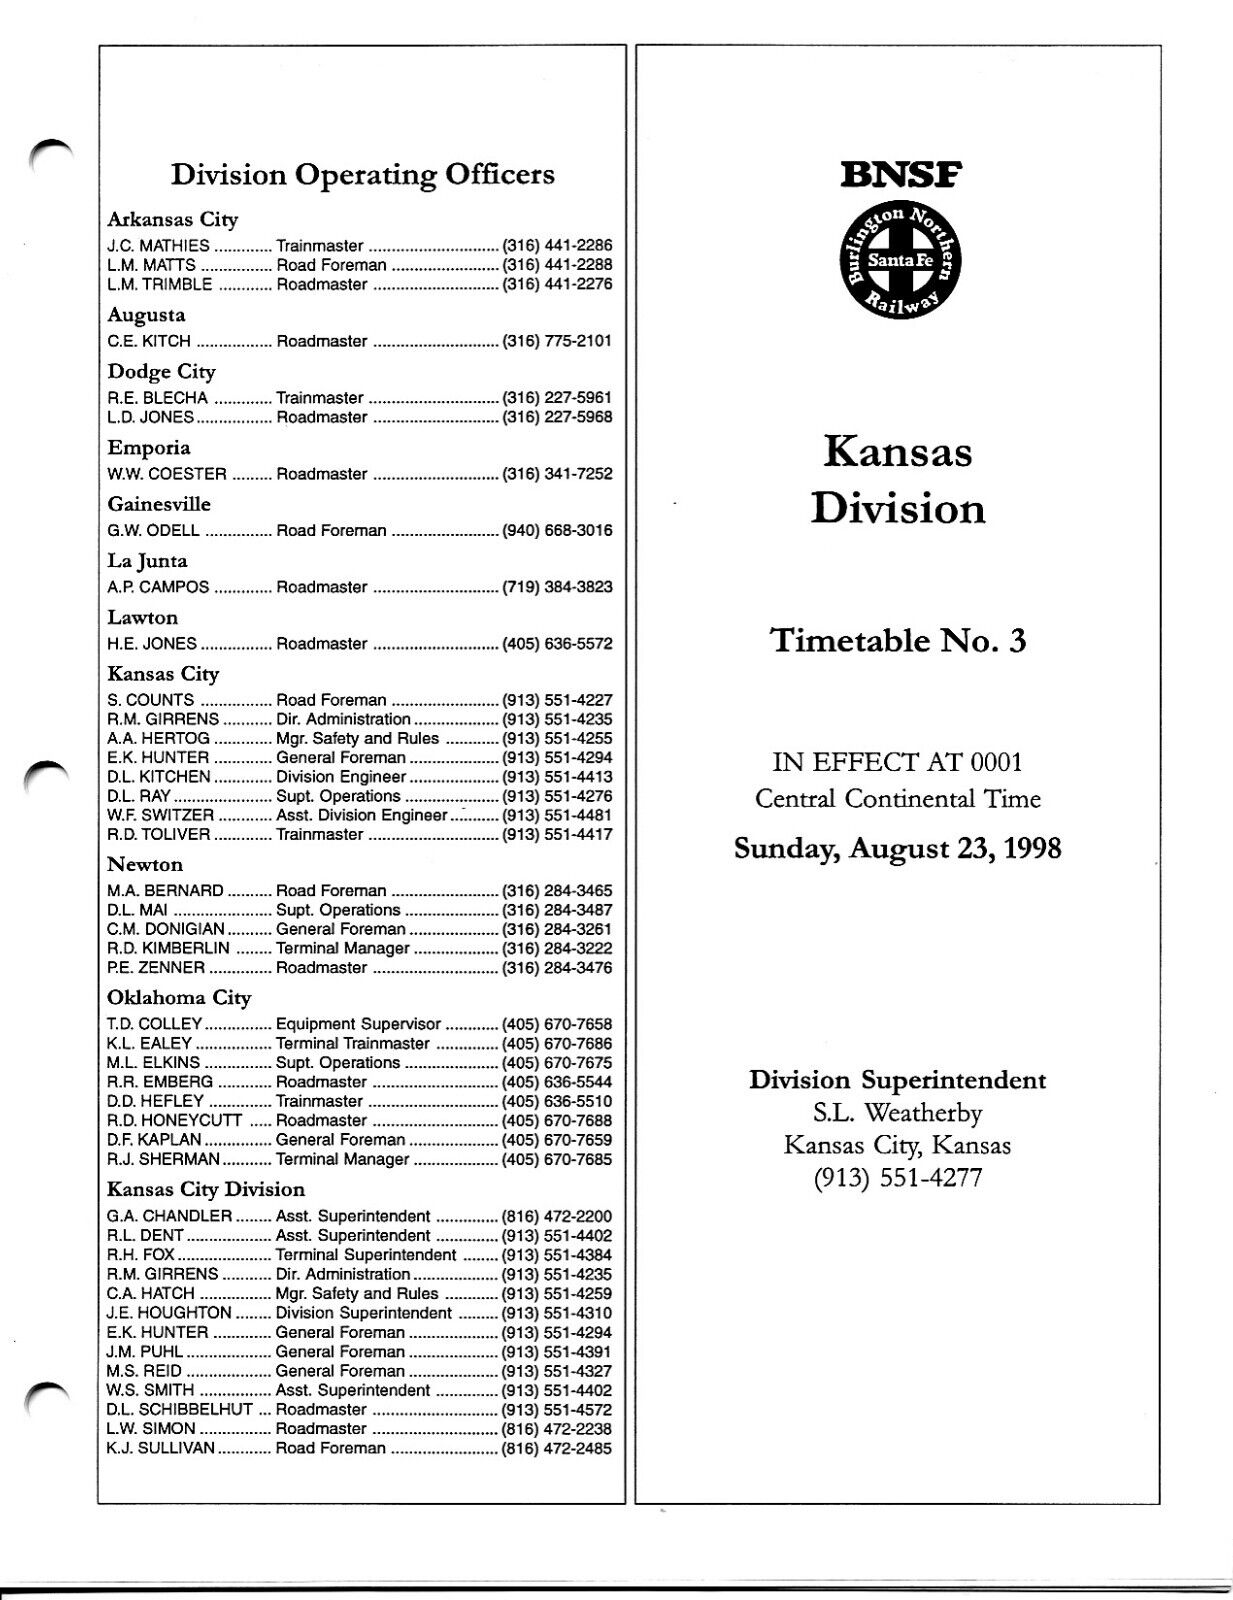 BURLINGTON NORTHERN SANTA FE KANSAS DIVISION TIMETABLE #3 AUGUST 23, 1998 BNSF